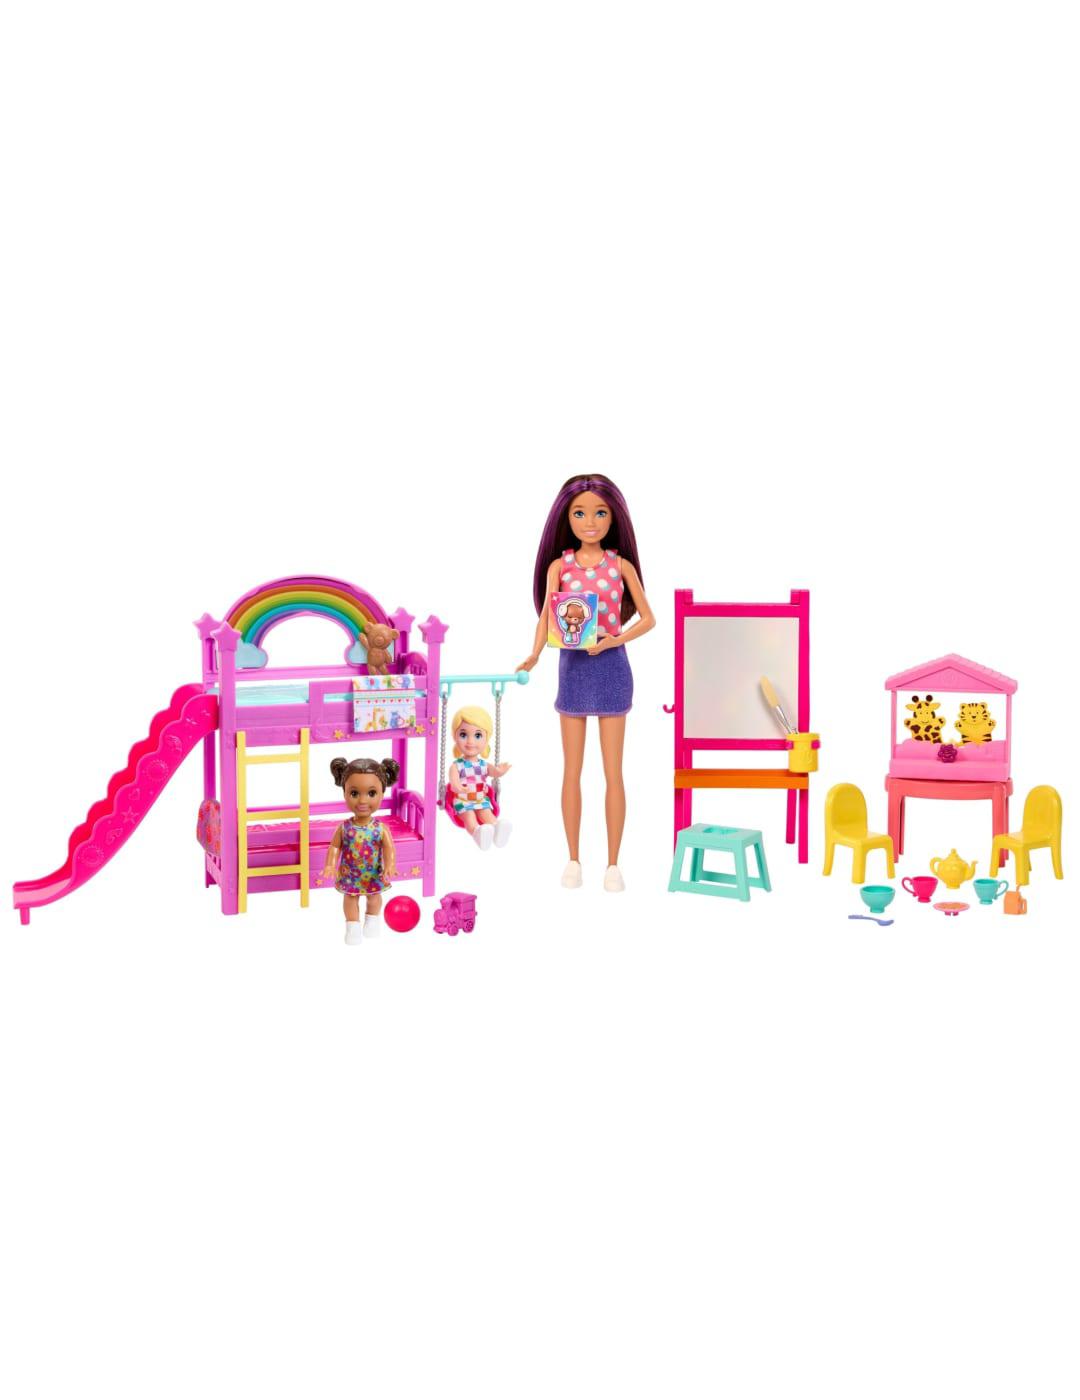 Barbie Skipper Babysitters Nap 'n Nuture Nursery Playset - Shop Playsets at  H-E-B